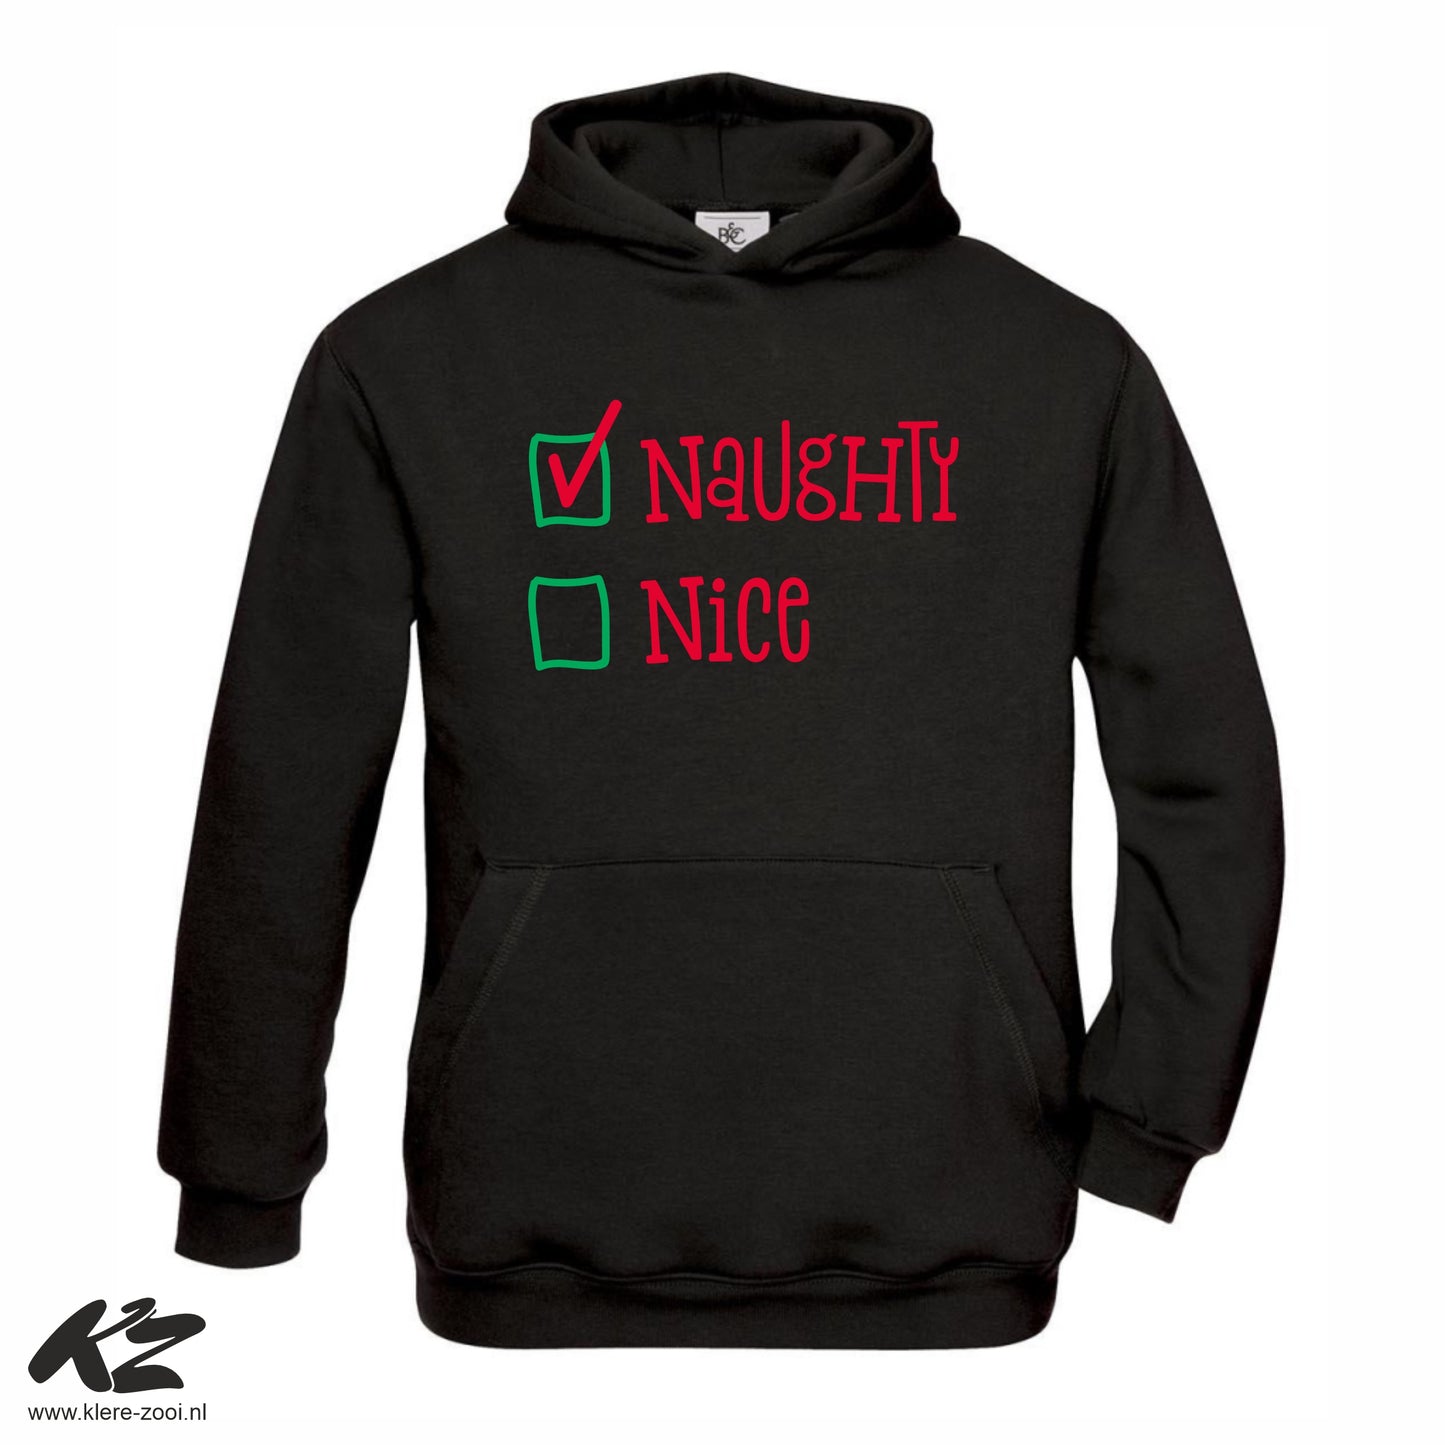 Naughty / Nice